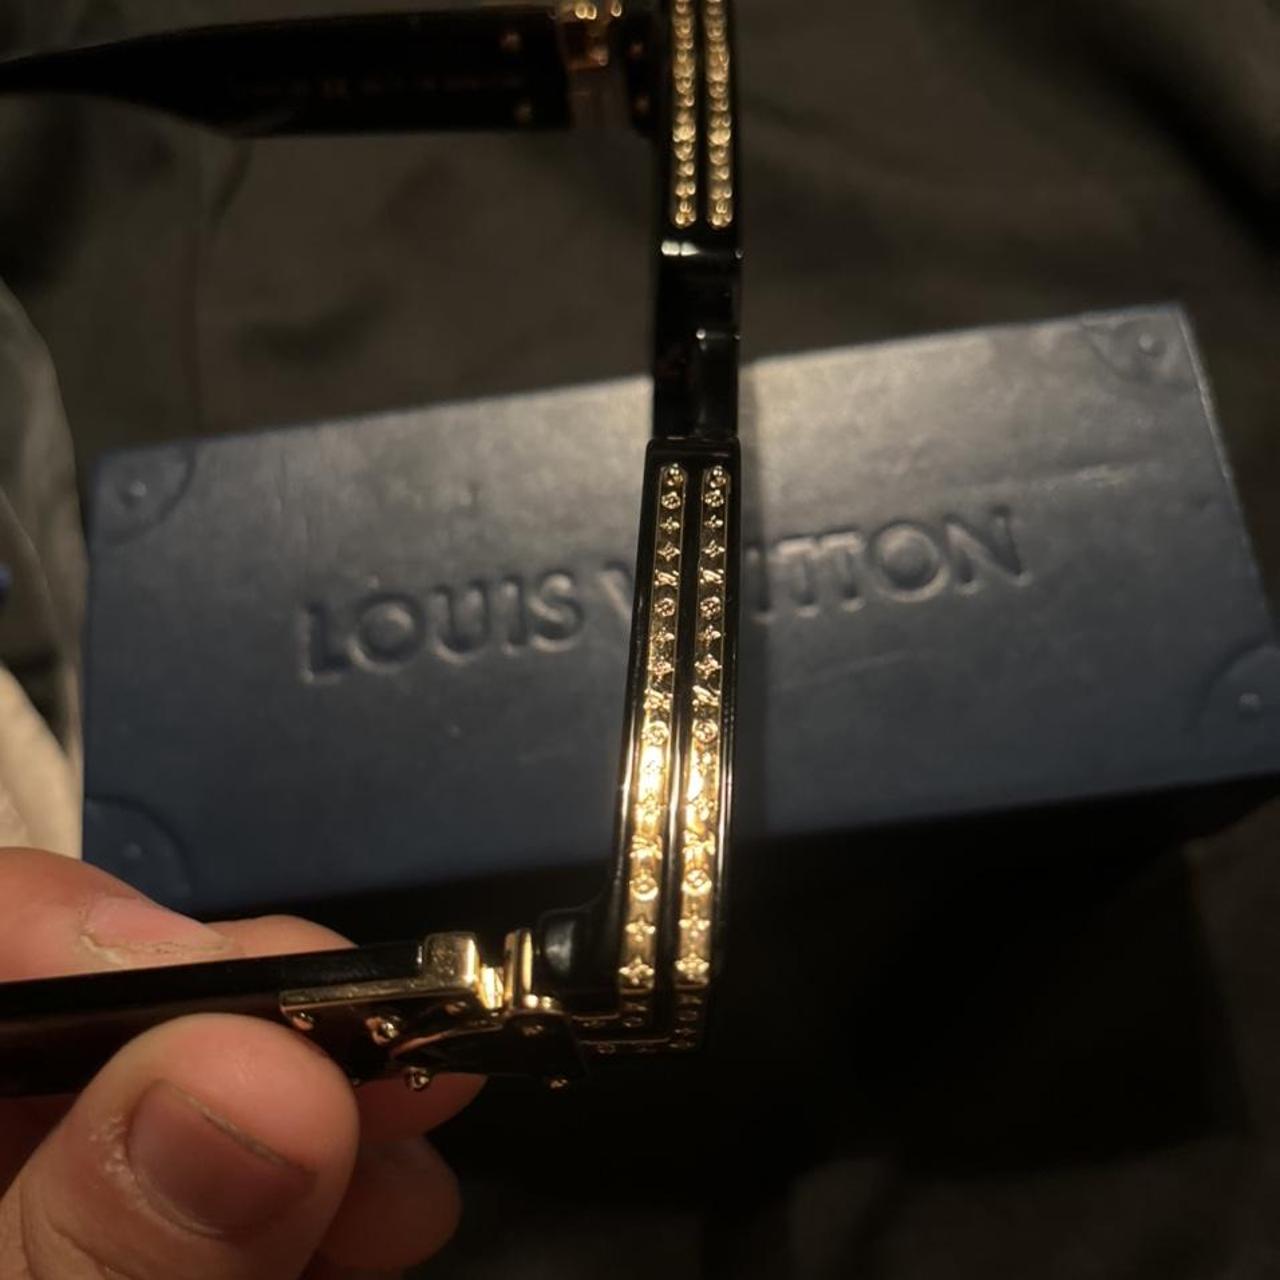 Louis Vuitton Swim Trunks Worn twice & dry - Depop